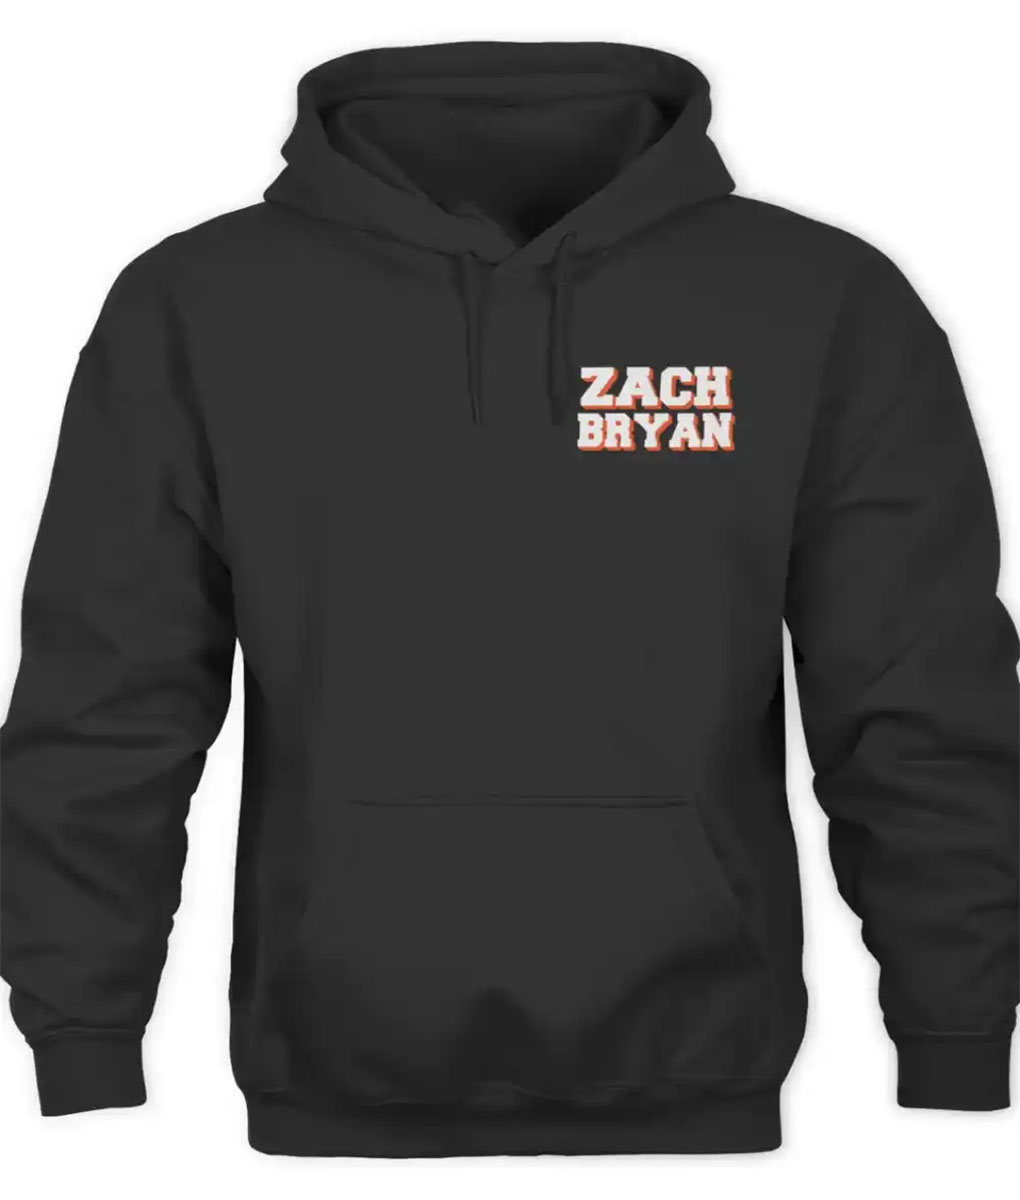 Zach Bryan Tour Black Hoodie (2)